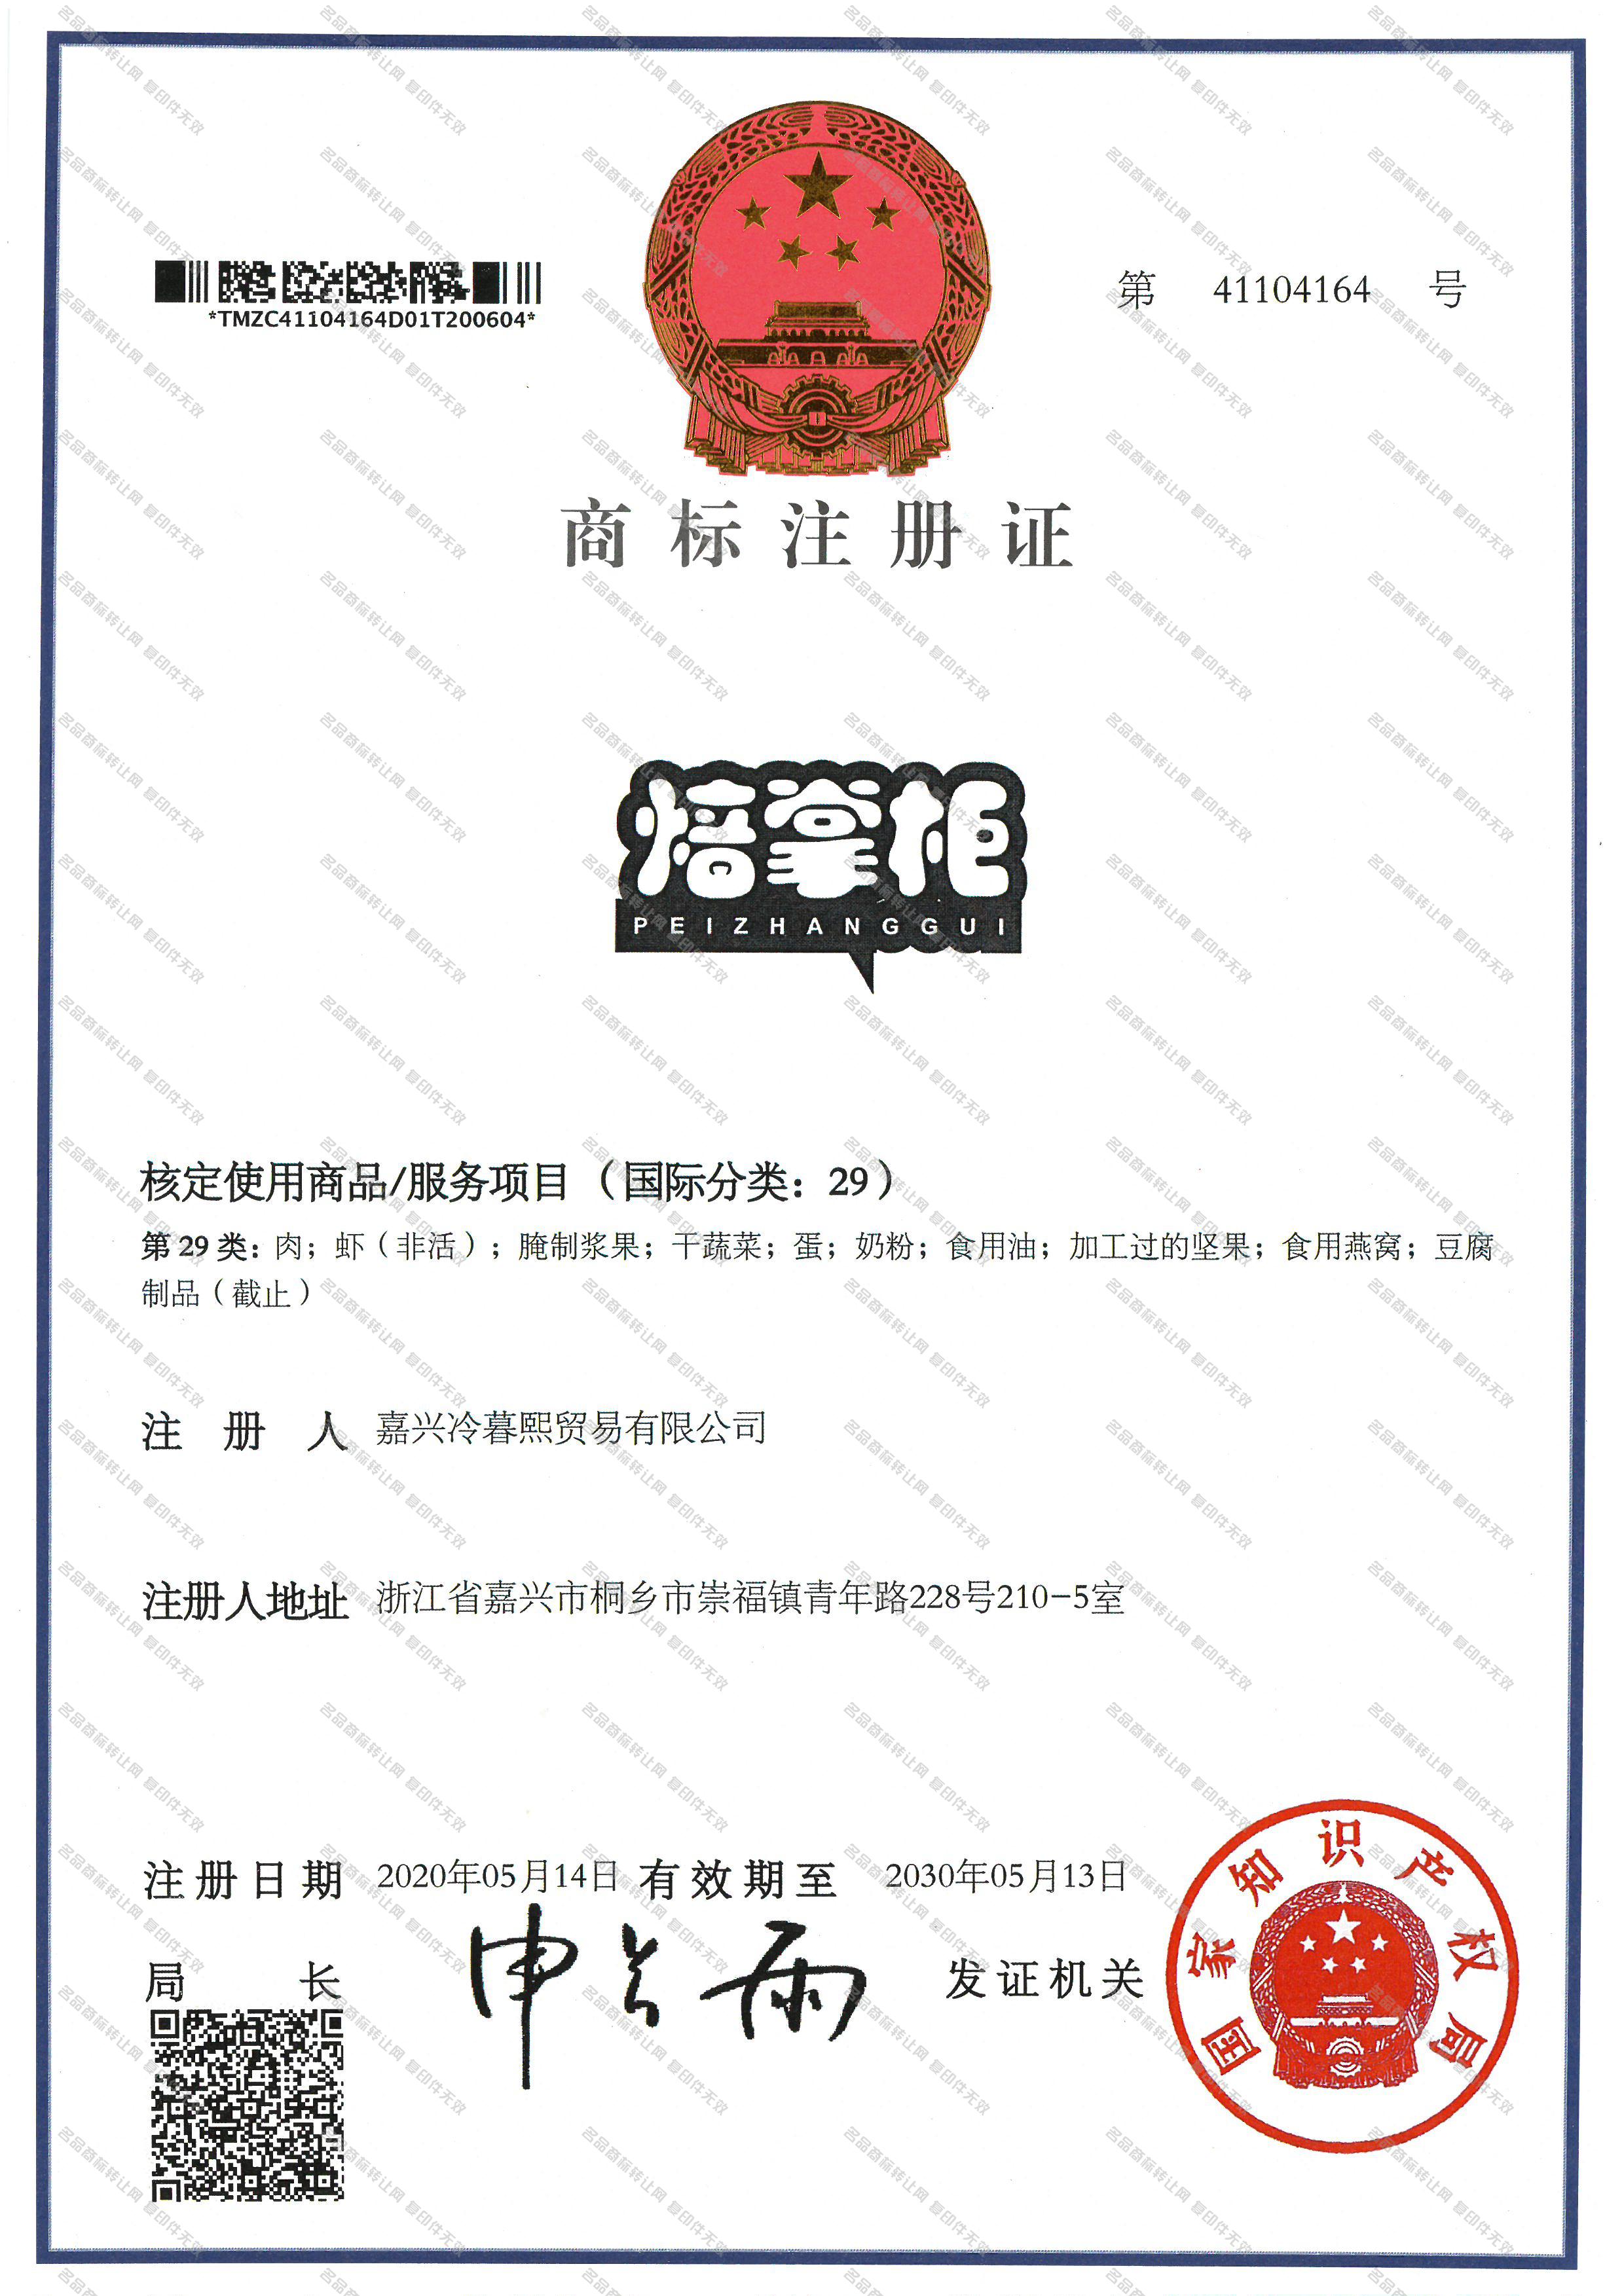 焙掌柜 PEI ZHANG GUI注册证